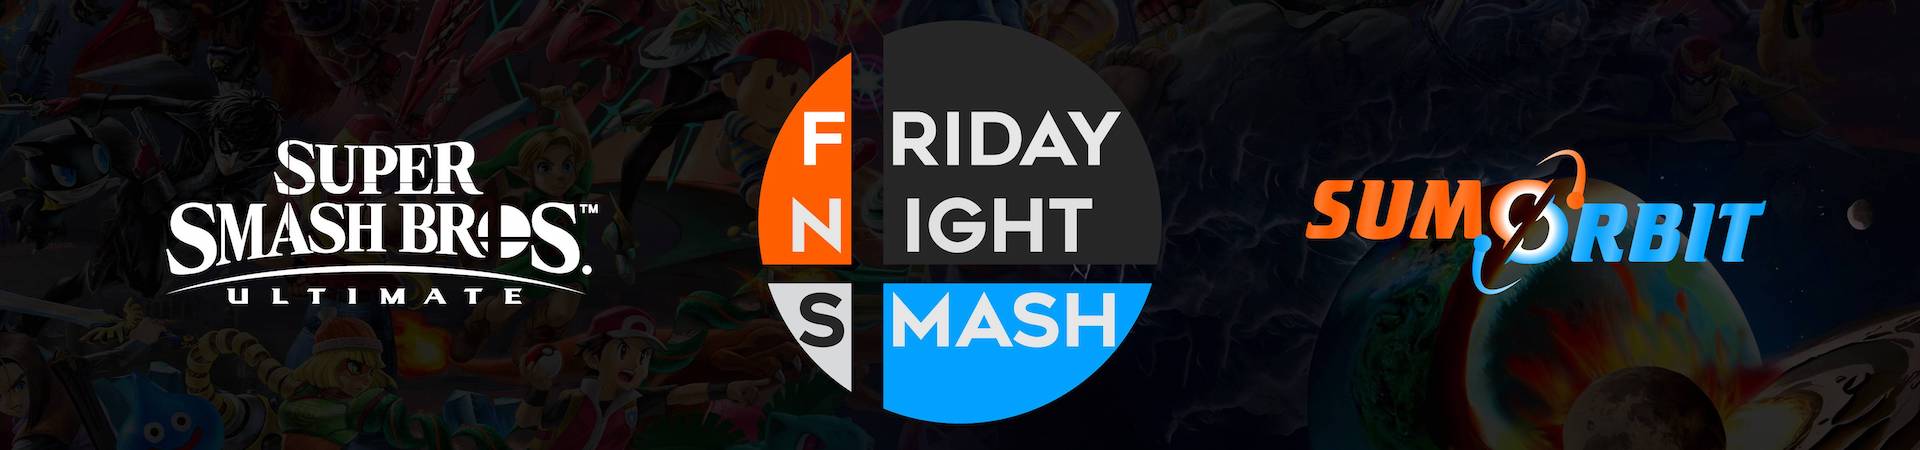 Friday Night Smash logo and banner